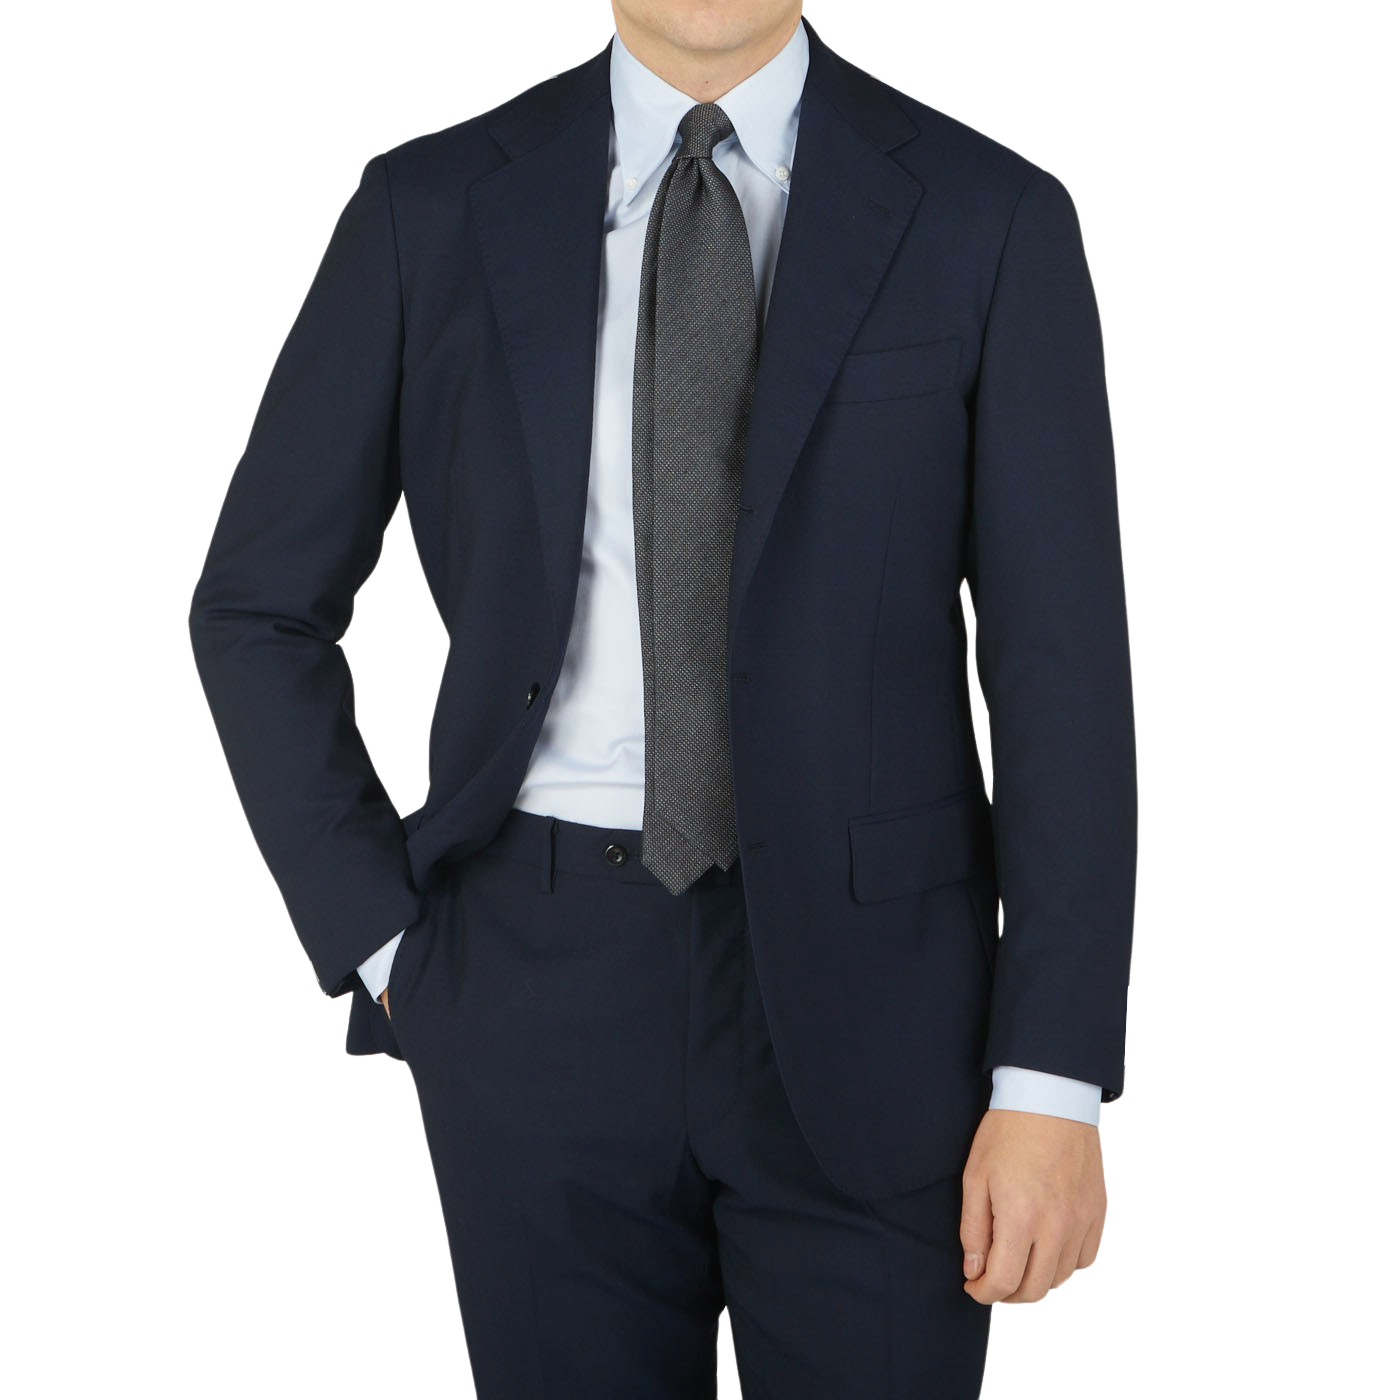 A man in a Ring Jacket navy high twist wool suit, wearing a blue tie.